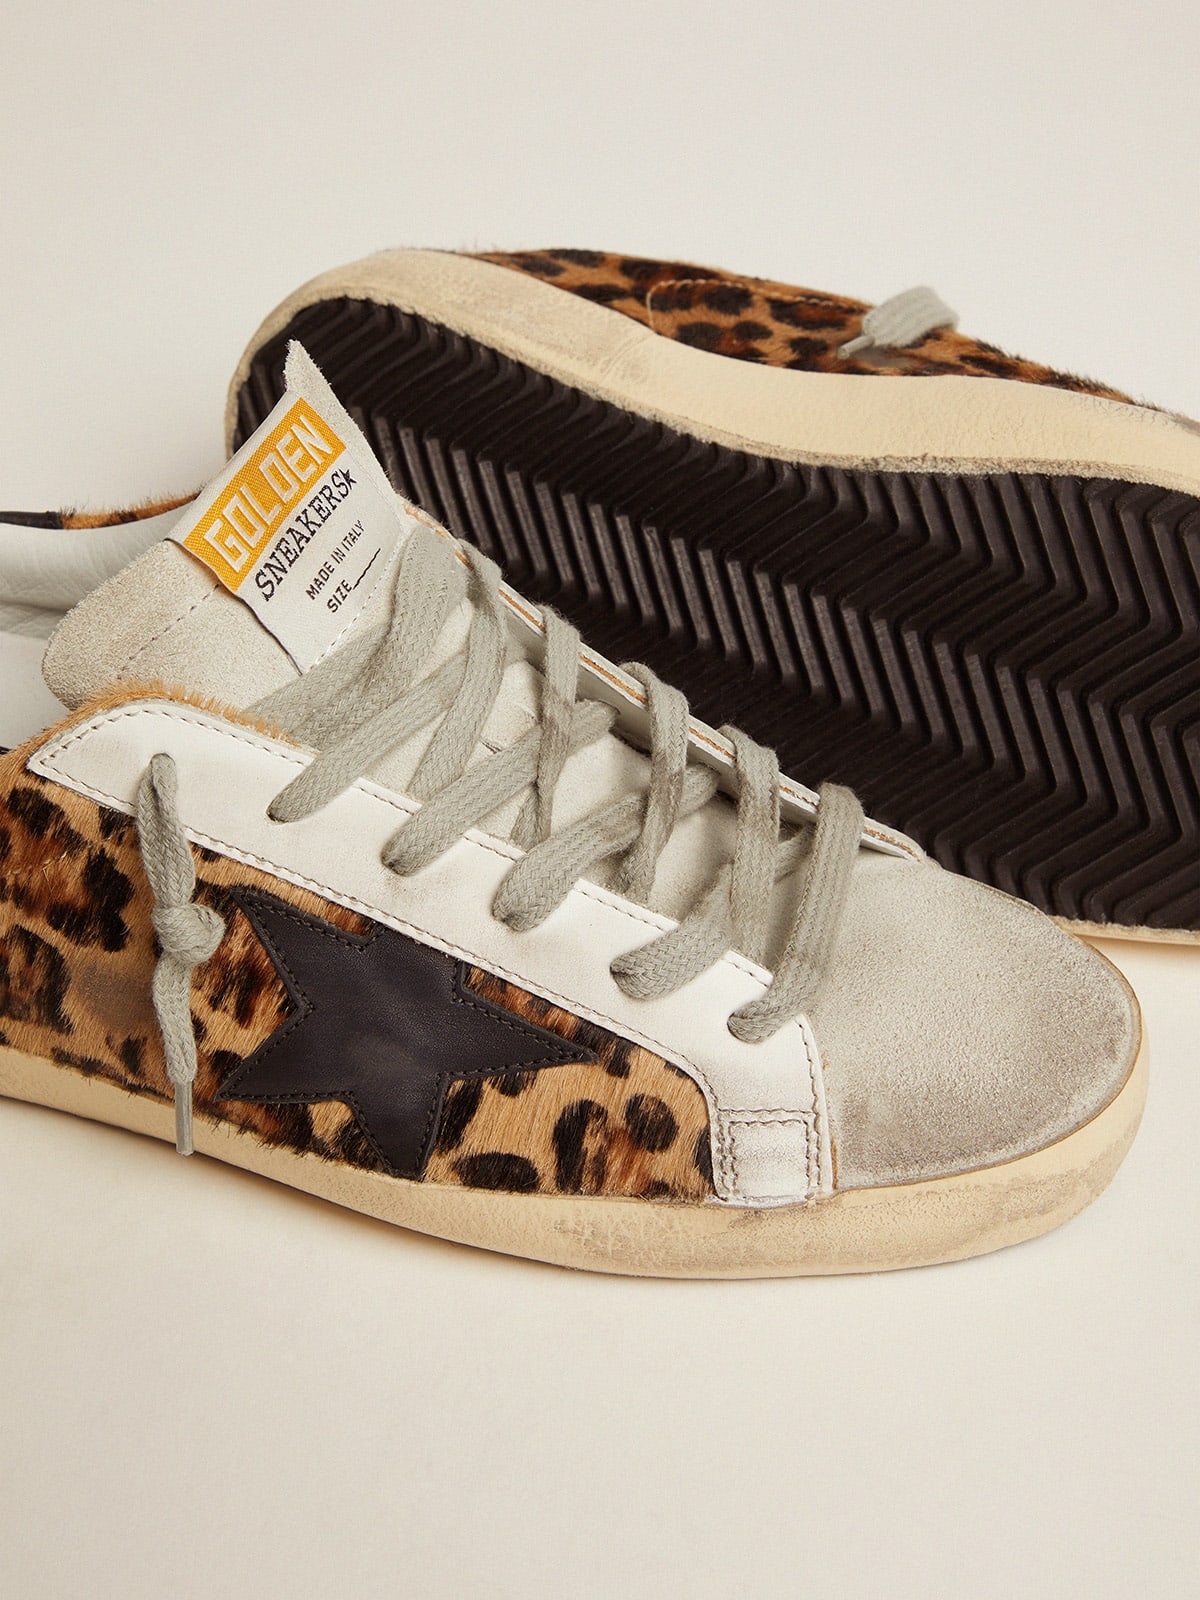 Golden Goose - Super-Star sneakers in leopard print flocked leather in 